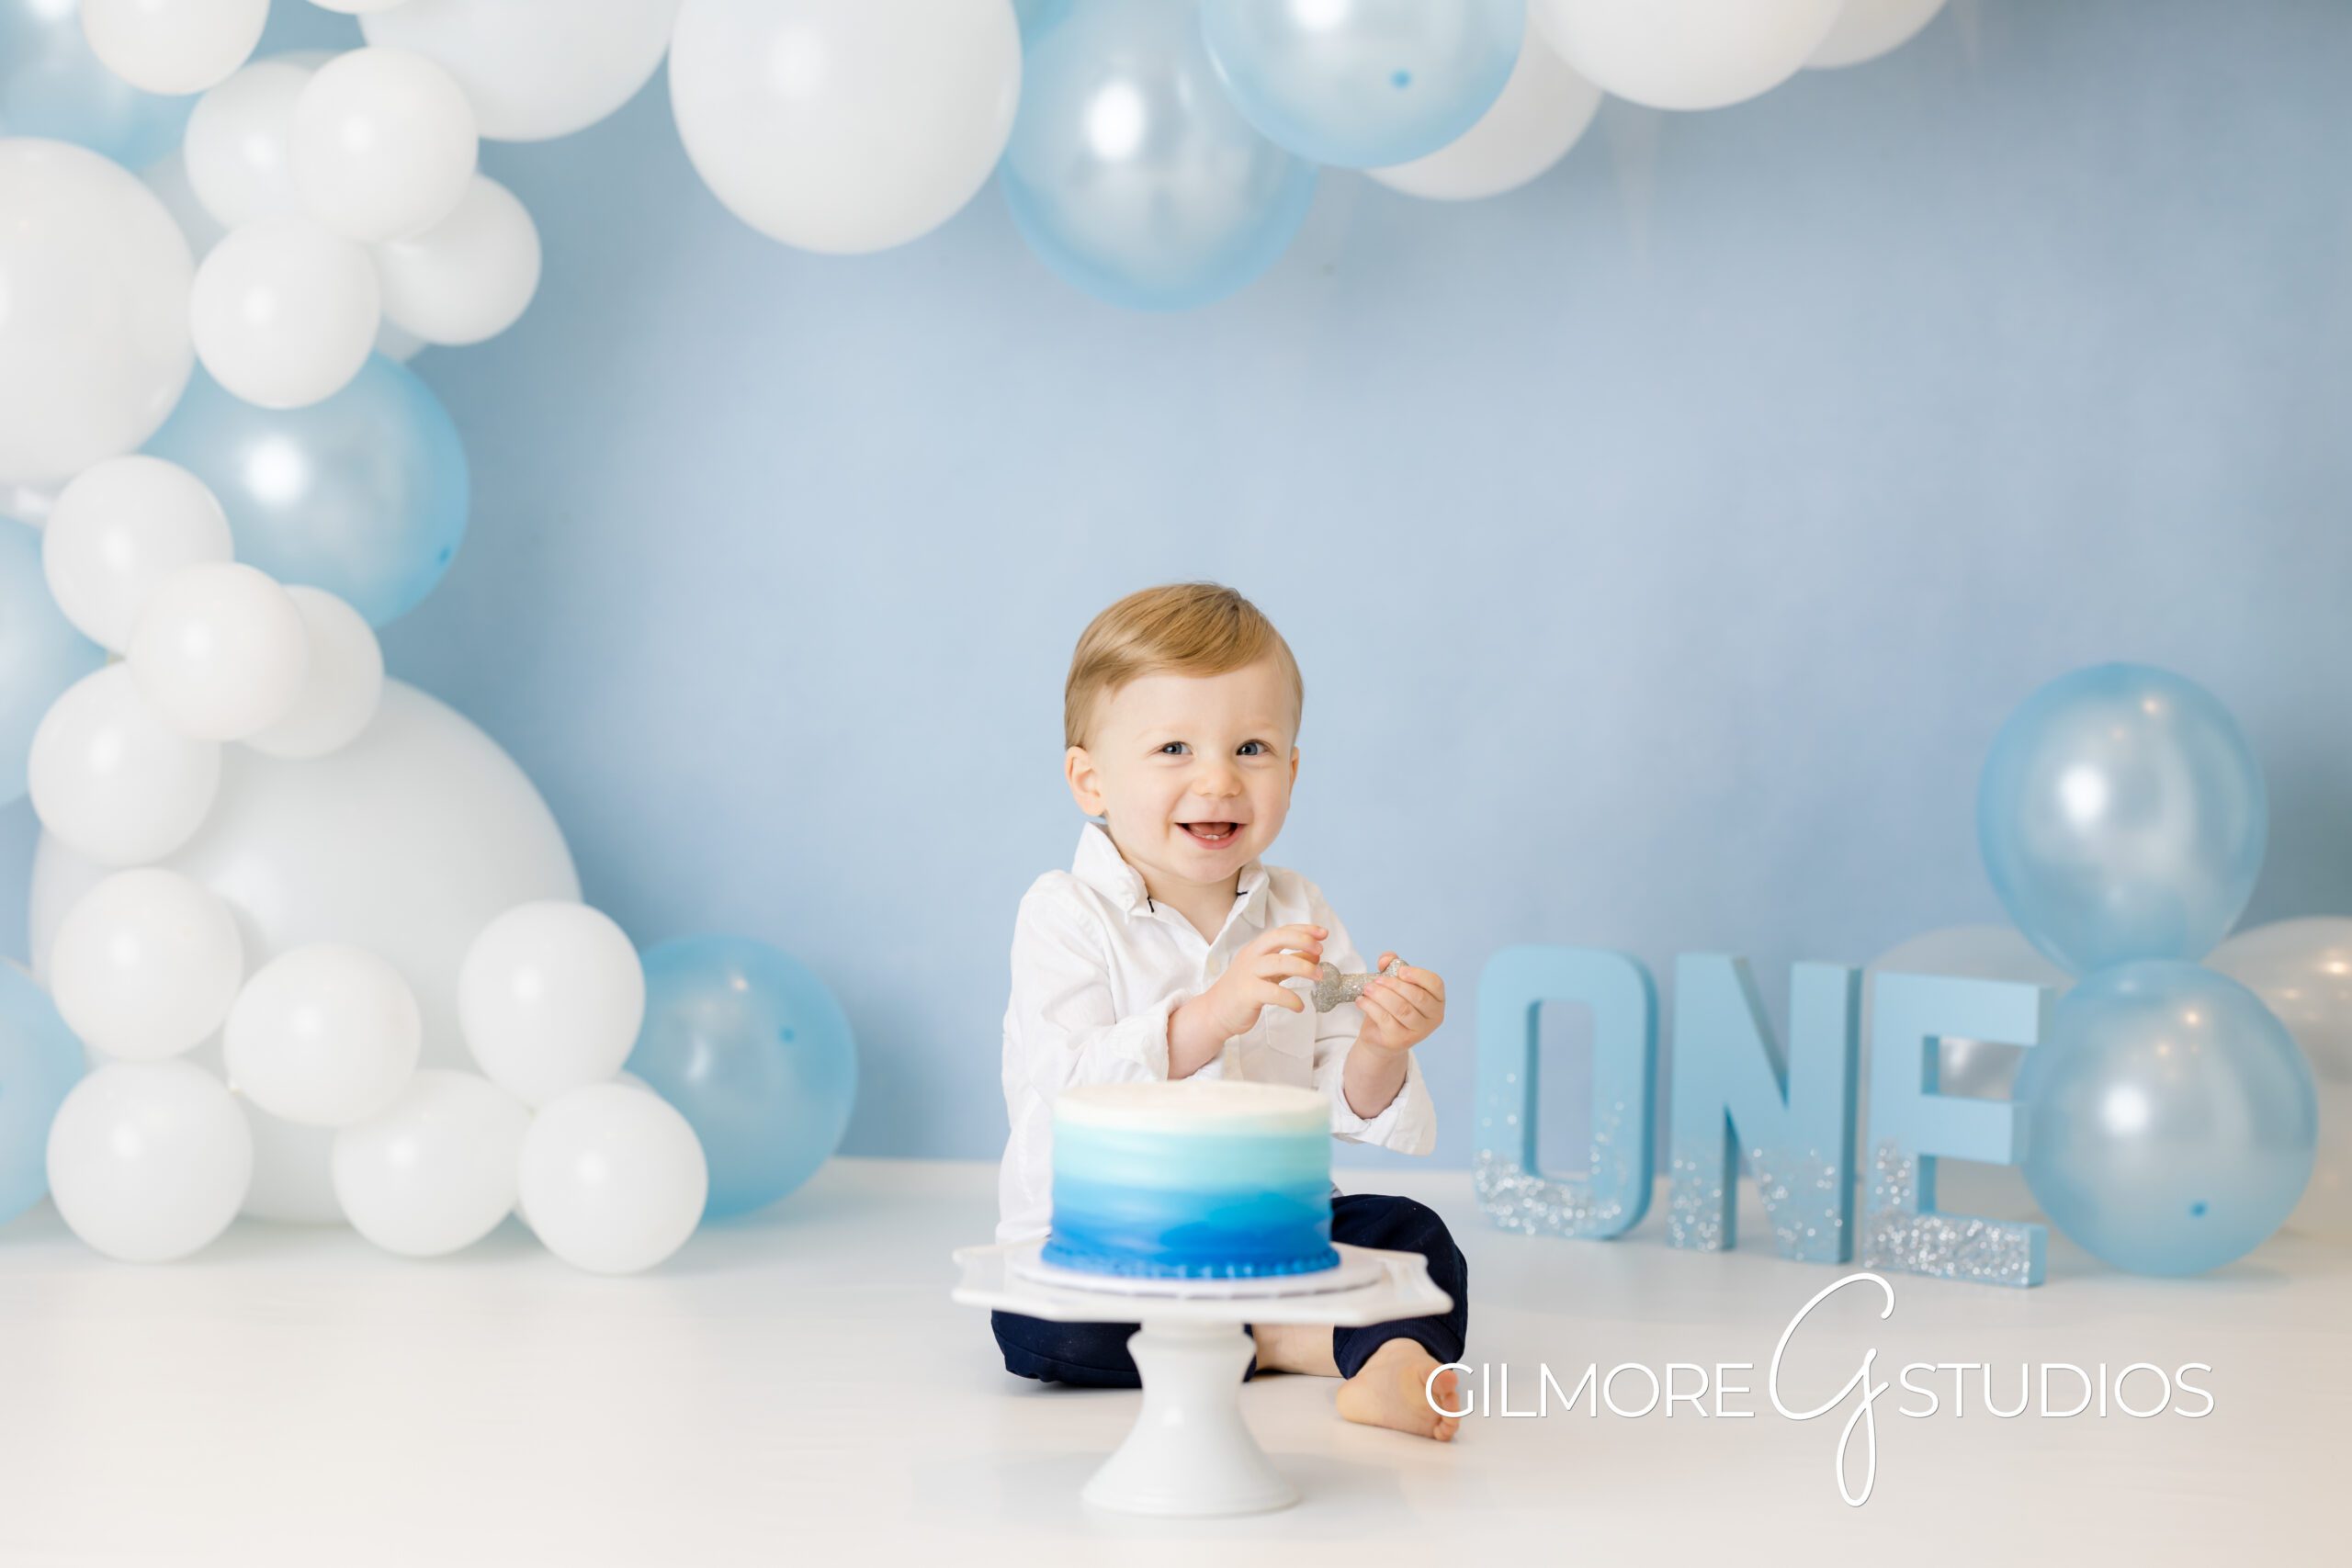 Simple 1st Birthday Cake Smash - Gilbert, AZ Photographer, baby on blue and white balloon background, brother, first birthday, cake smash photo shoot, Gilmore Studios